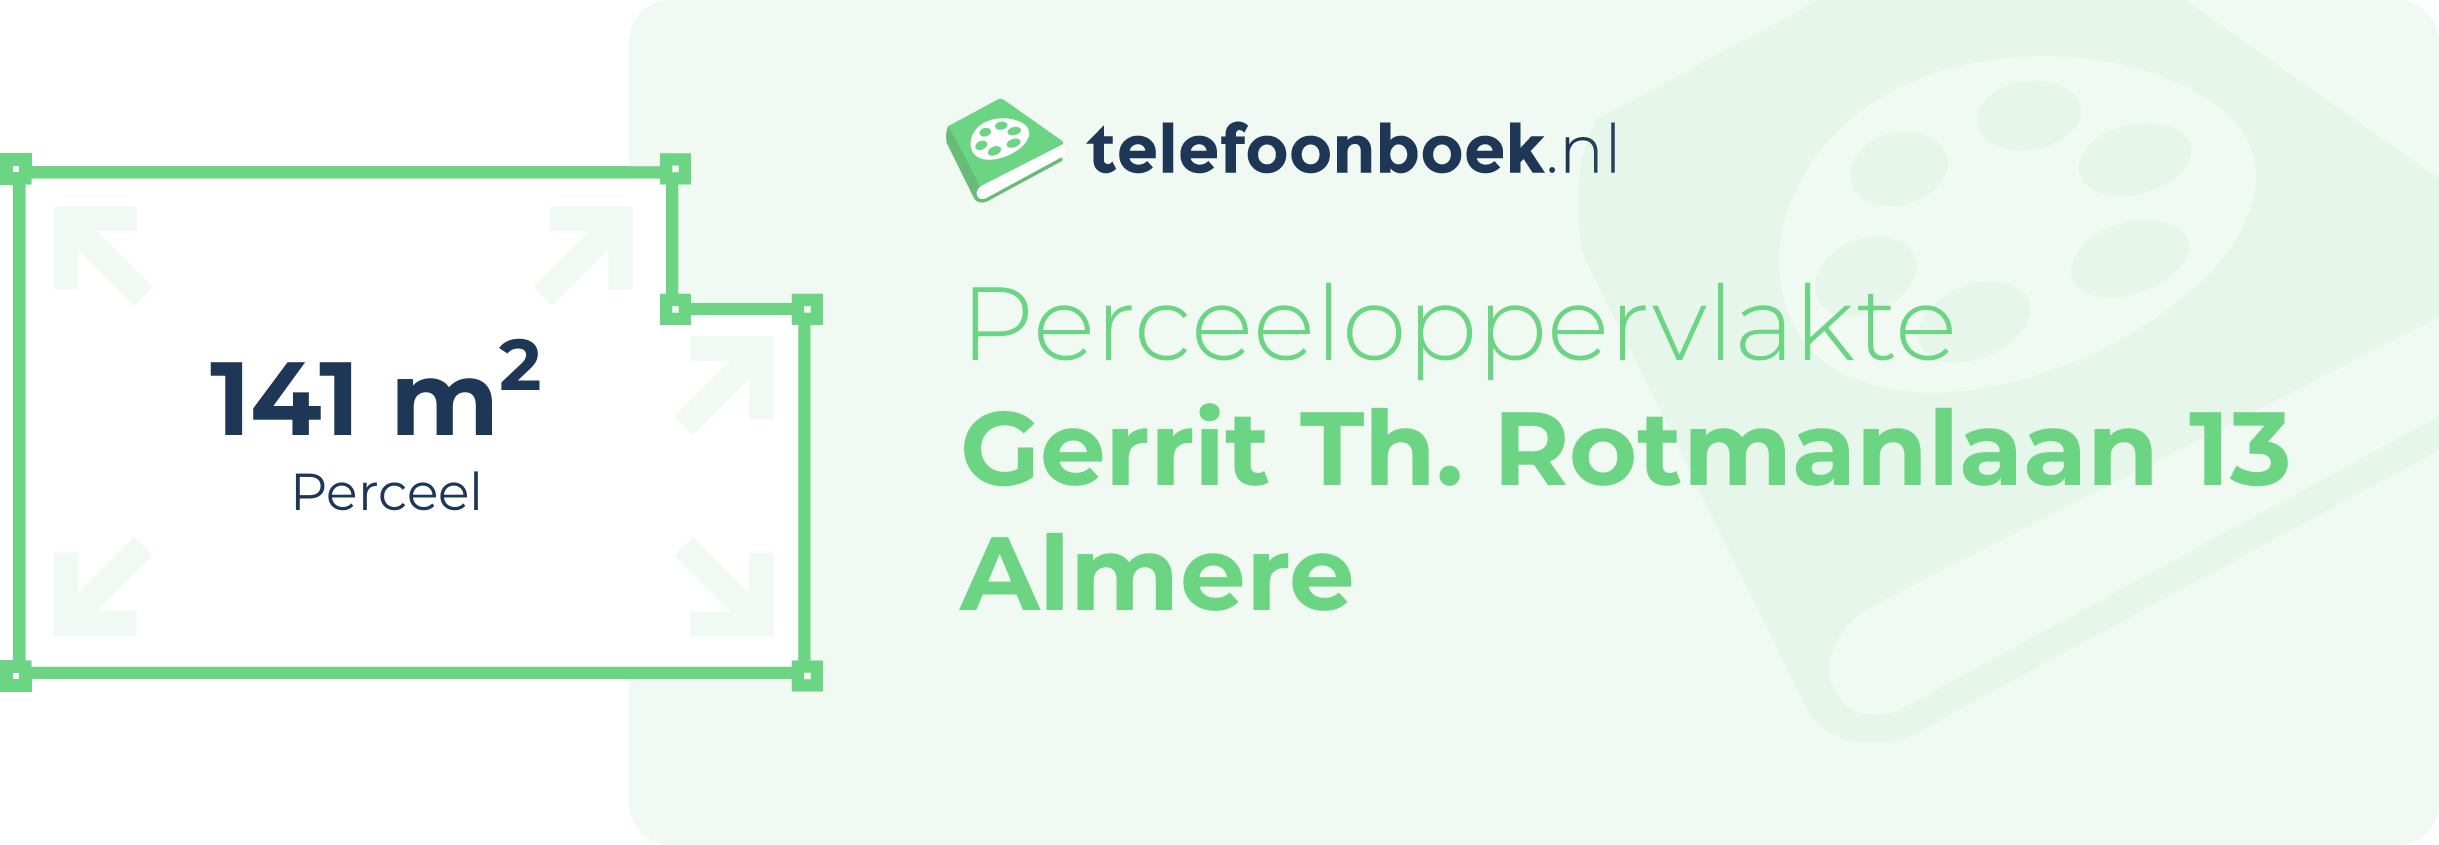 Perceeloppervlakte Gerrit Th. Rotmanlaan 13 Almere